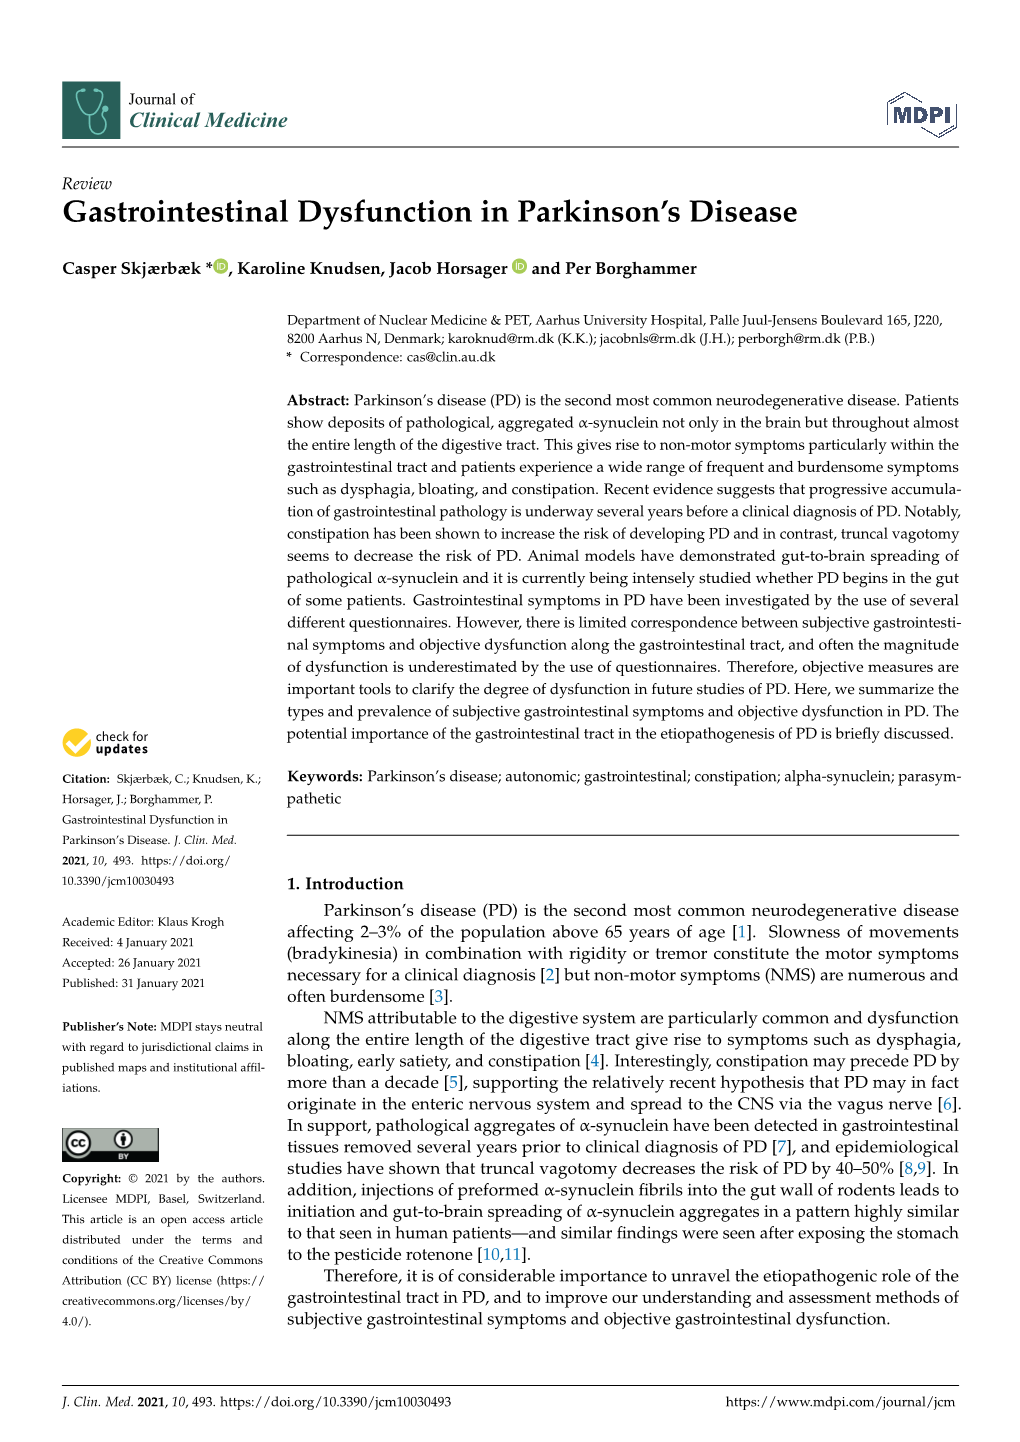 Gastrointestinal Dysfunction in Parkinson's Disease